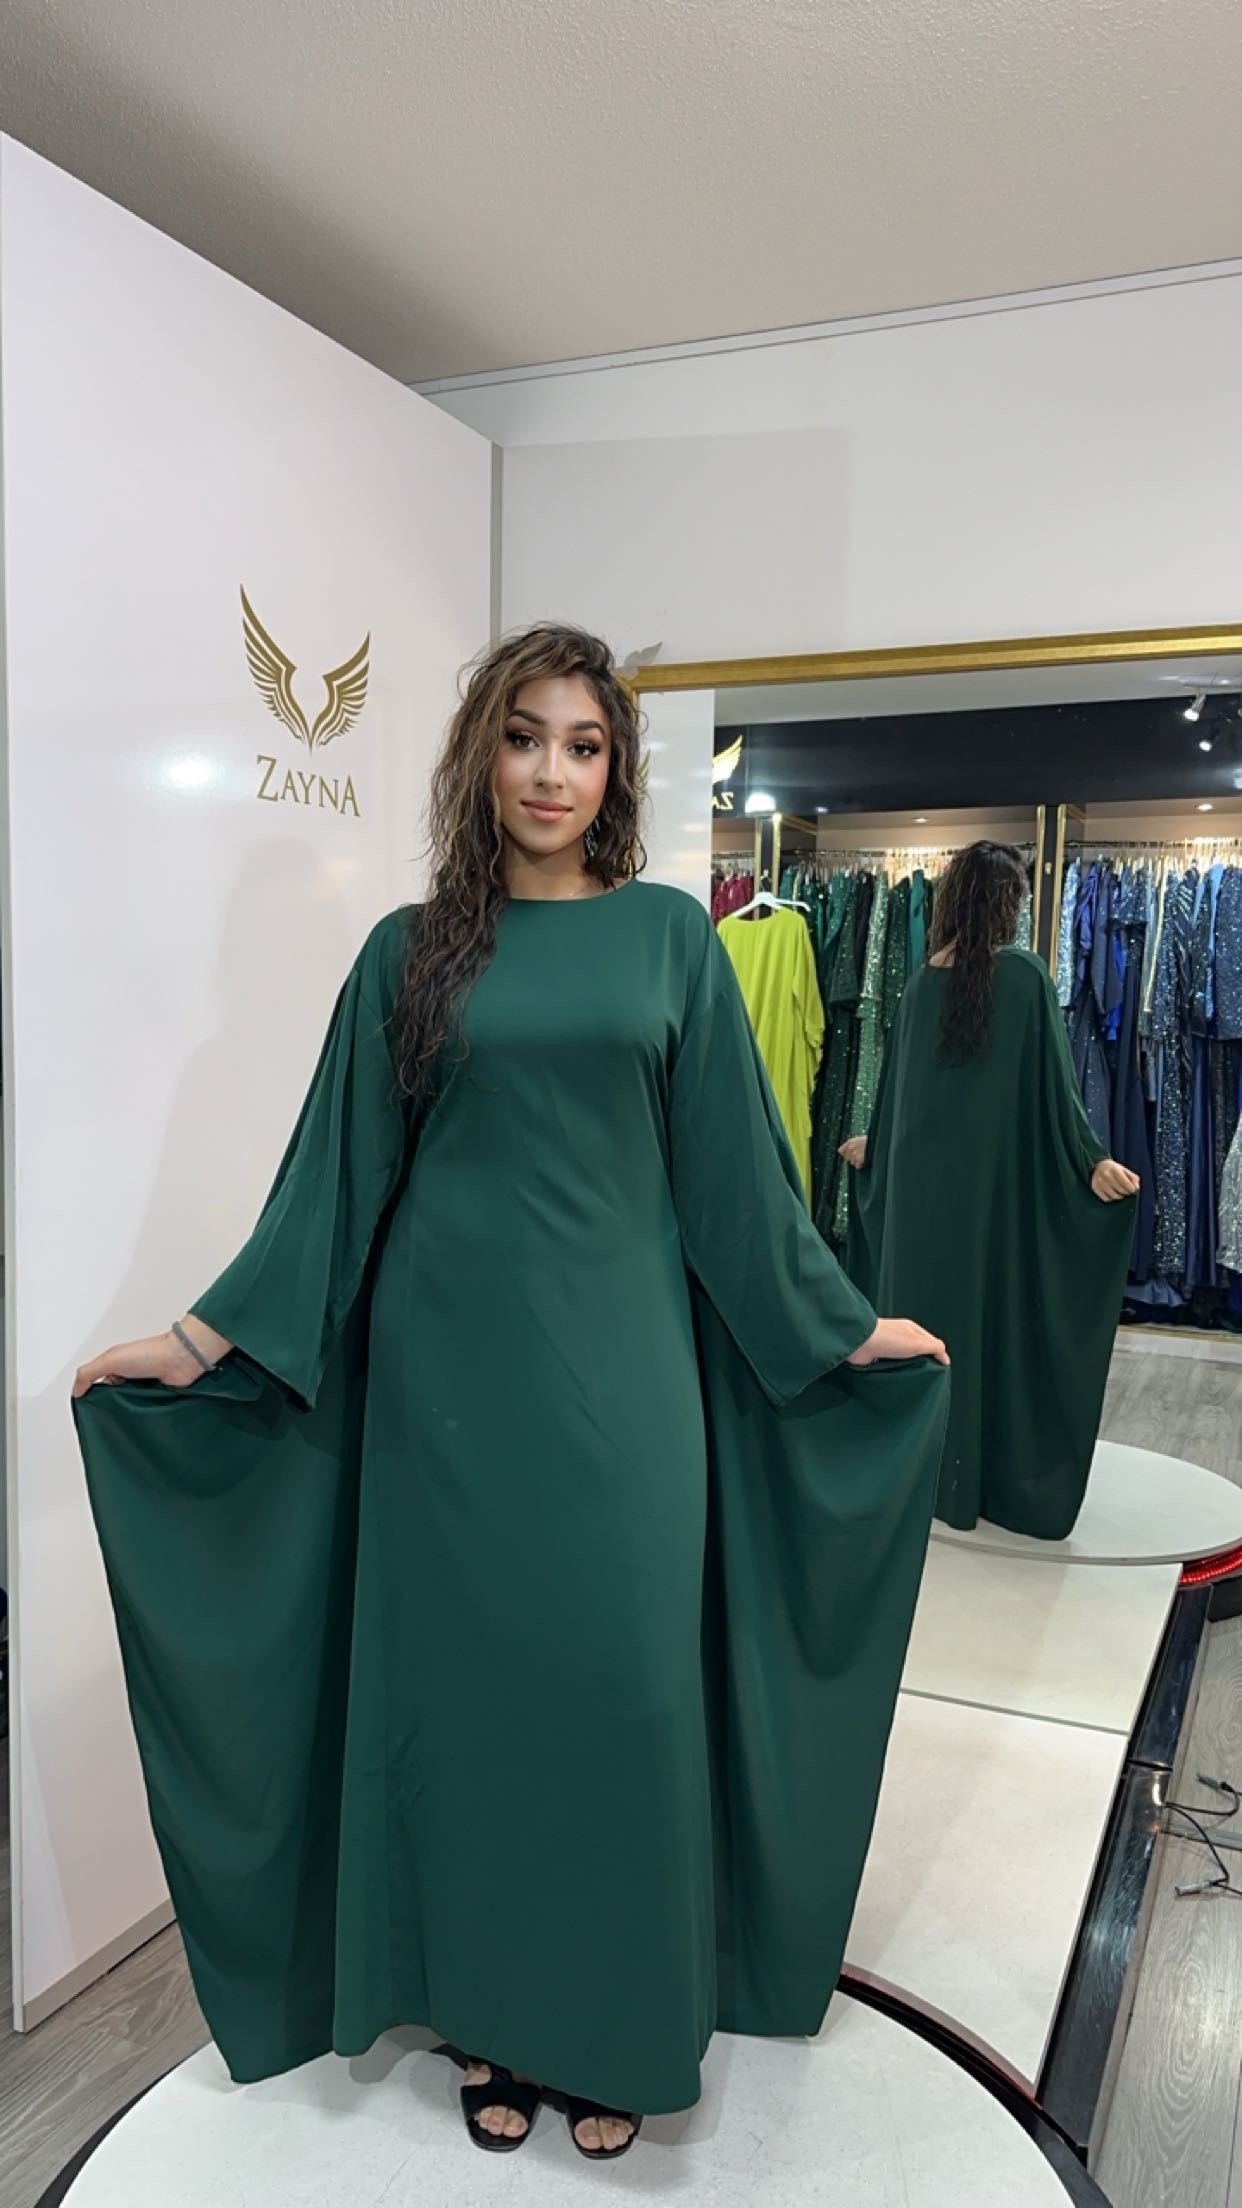 The Hayal dress